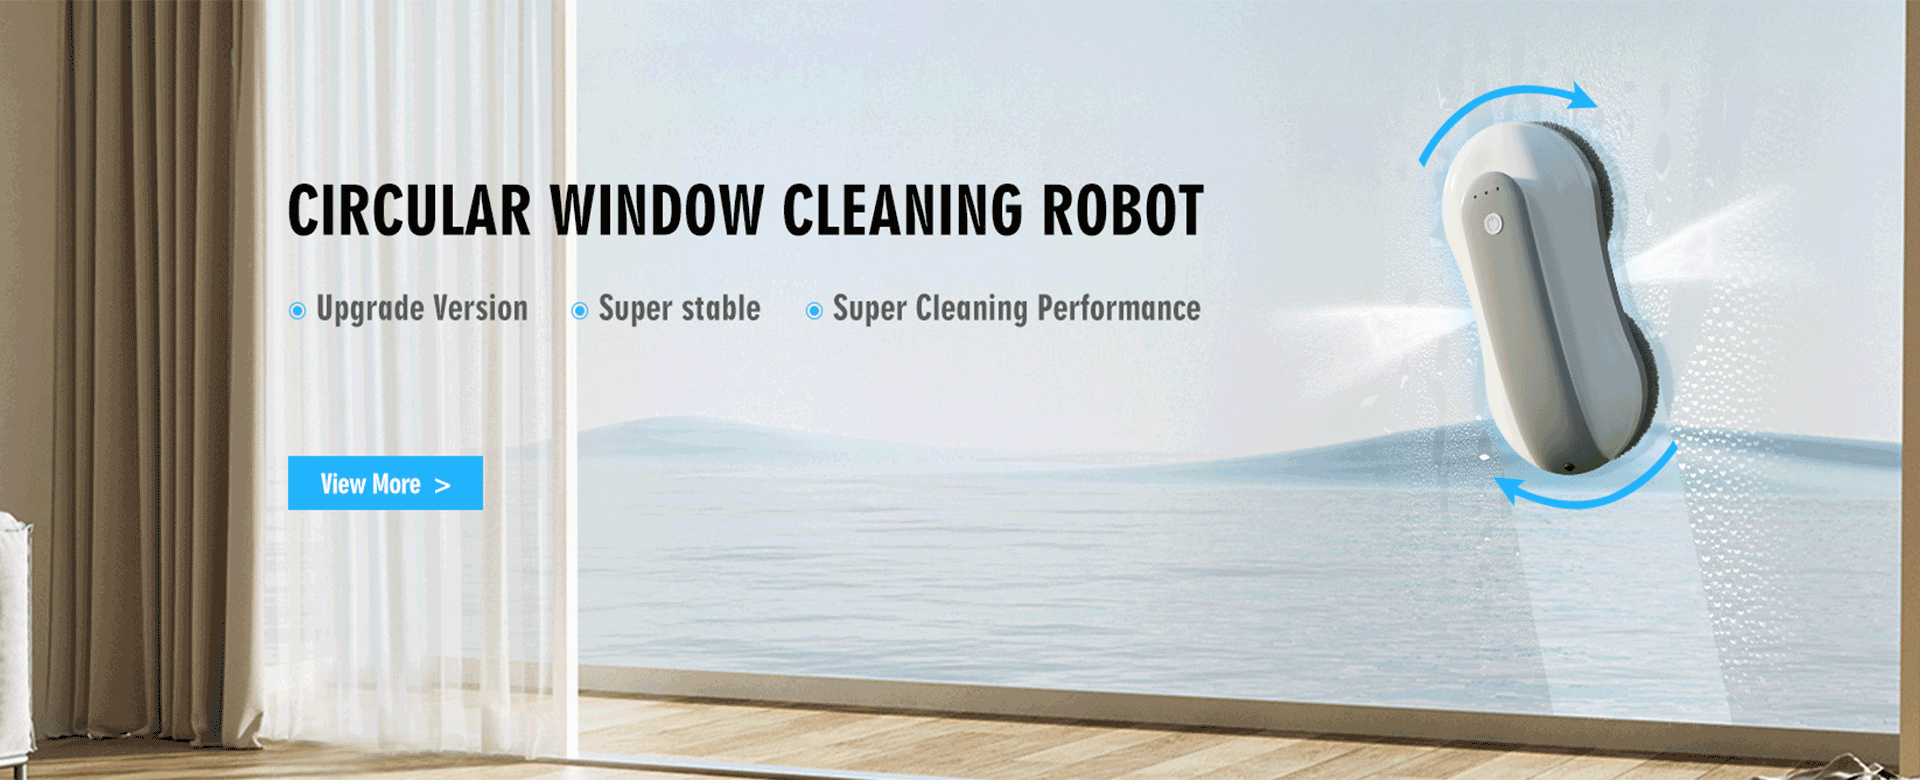 Circular window cleaning robot series